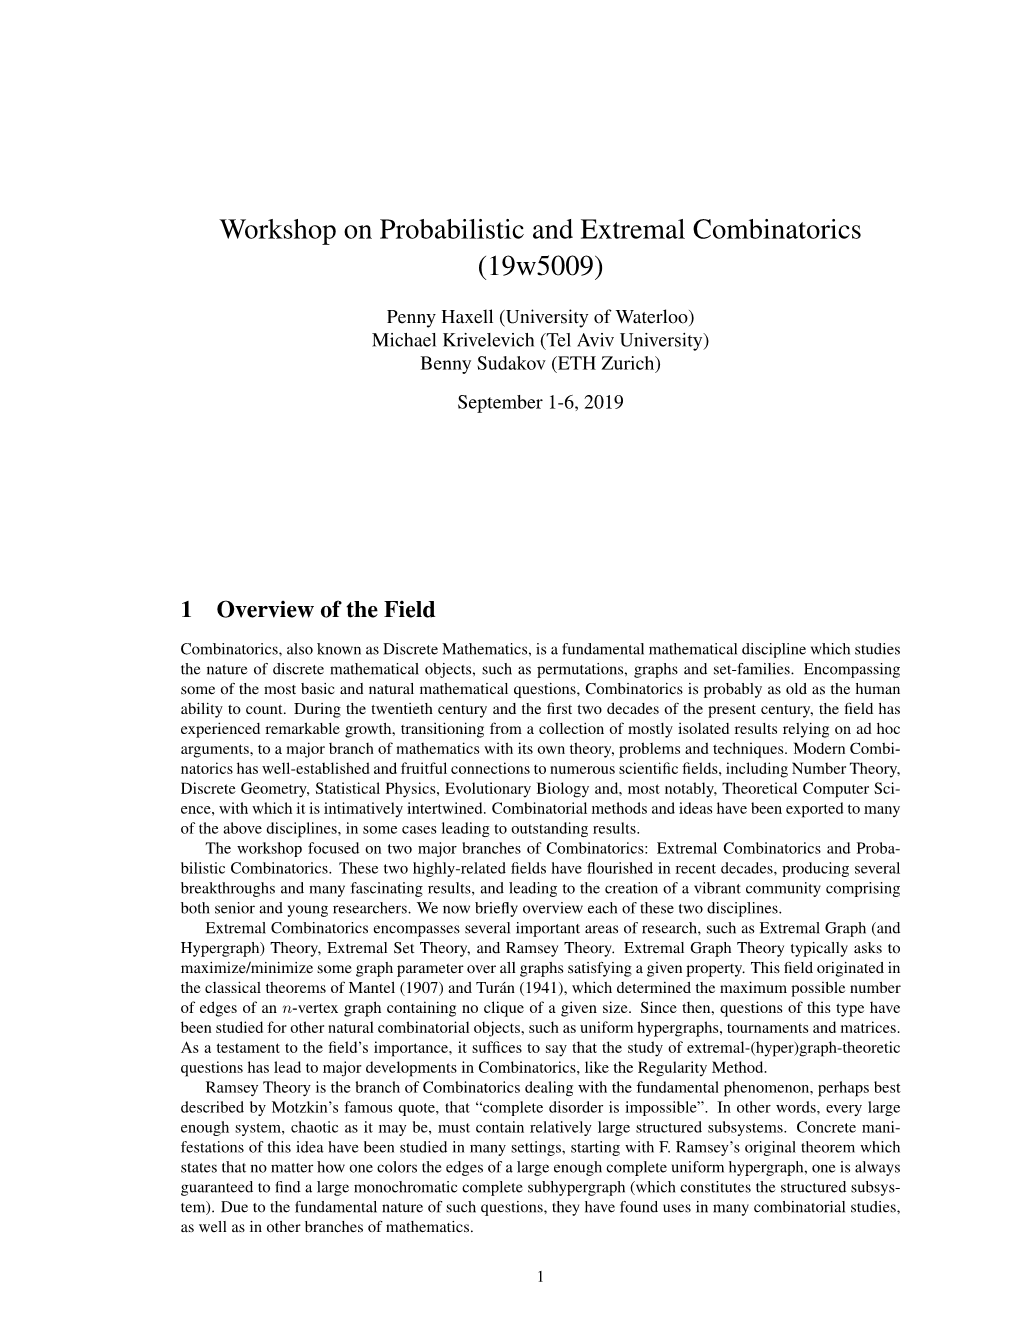 Workshop on Probabilistic and Extremal Combinatorics (19W5009)